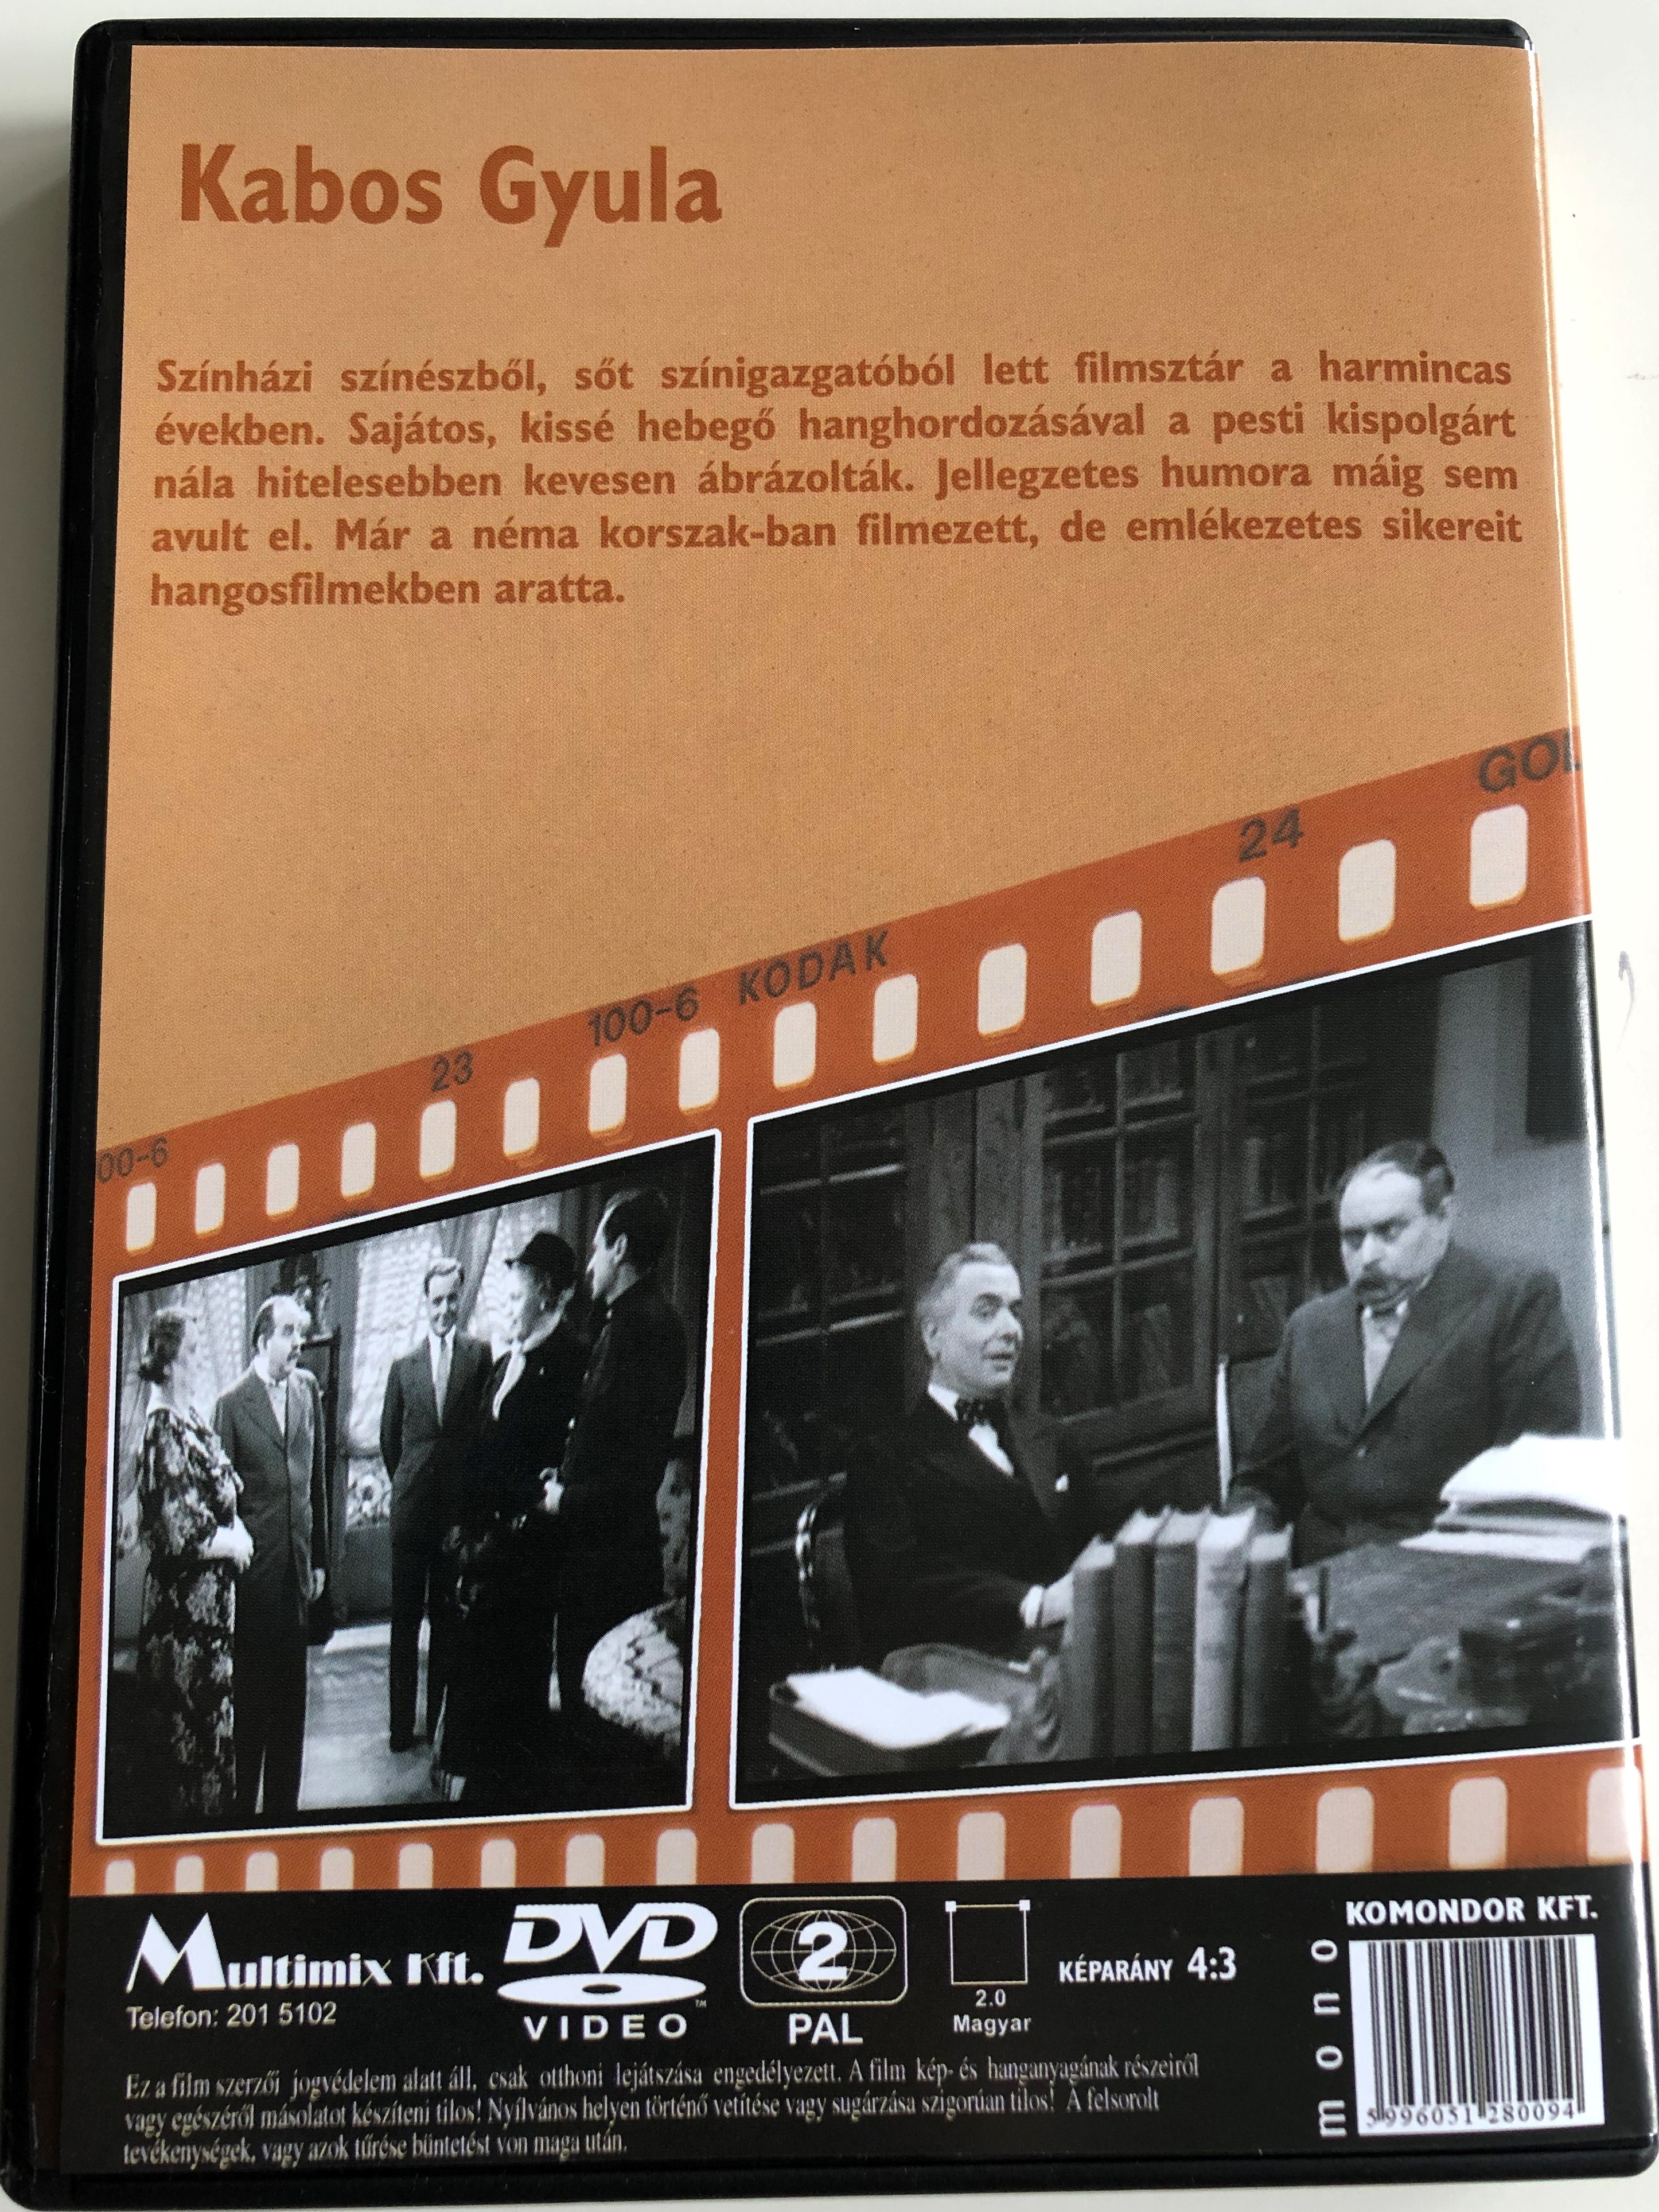 az-n-l-nyom-nem-olyan-dvd-1937-directed-by-vajda-l-szl-starring-tolnay-kl-ri-r-day-imre-rajnai-g-bor-2-.jpg